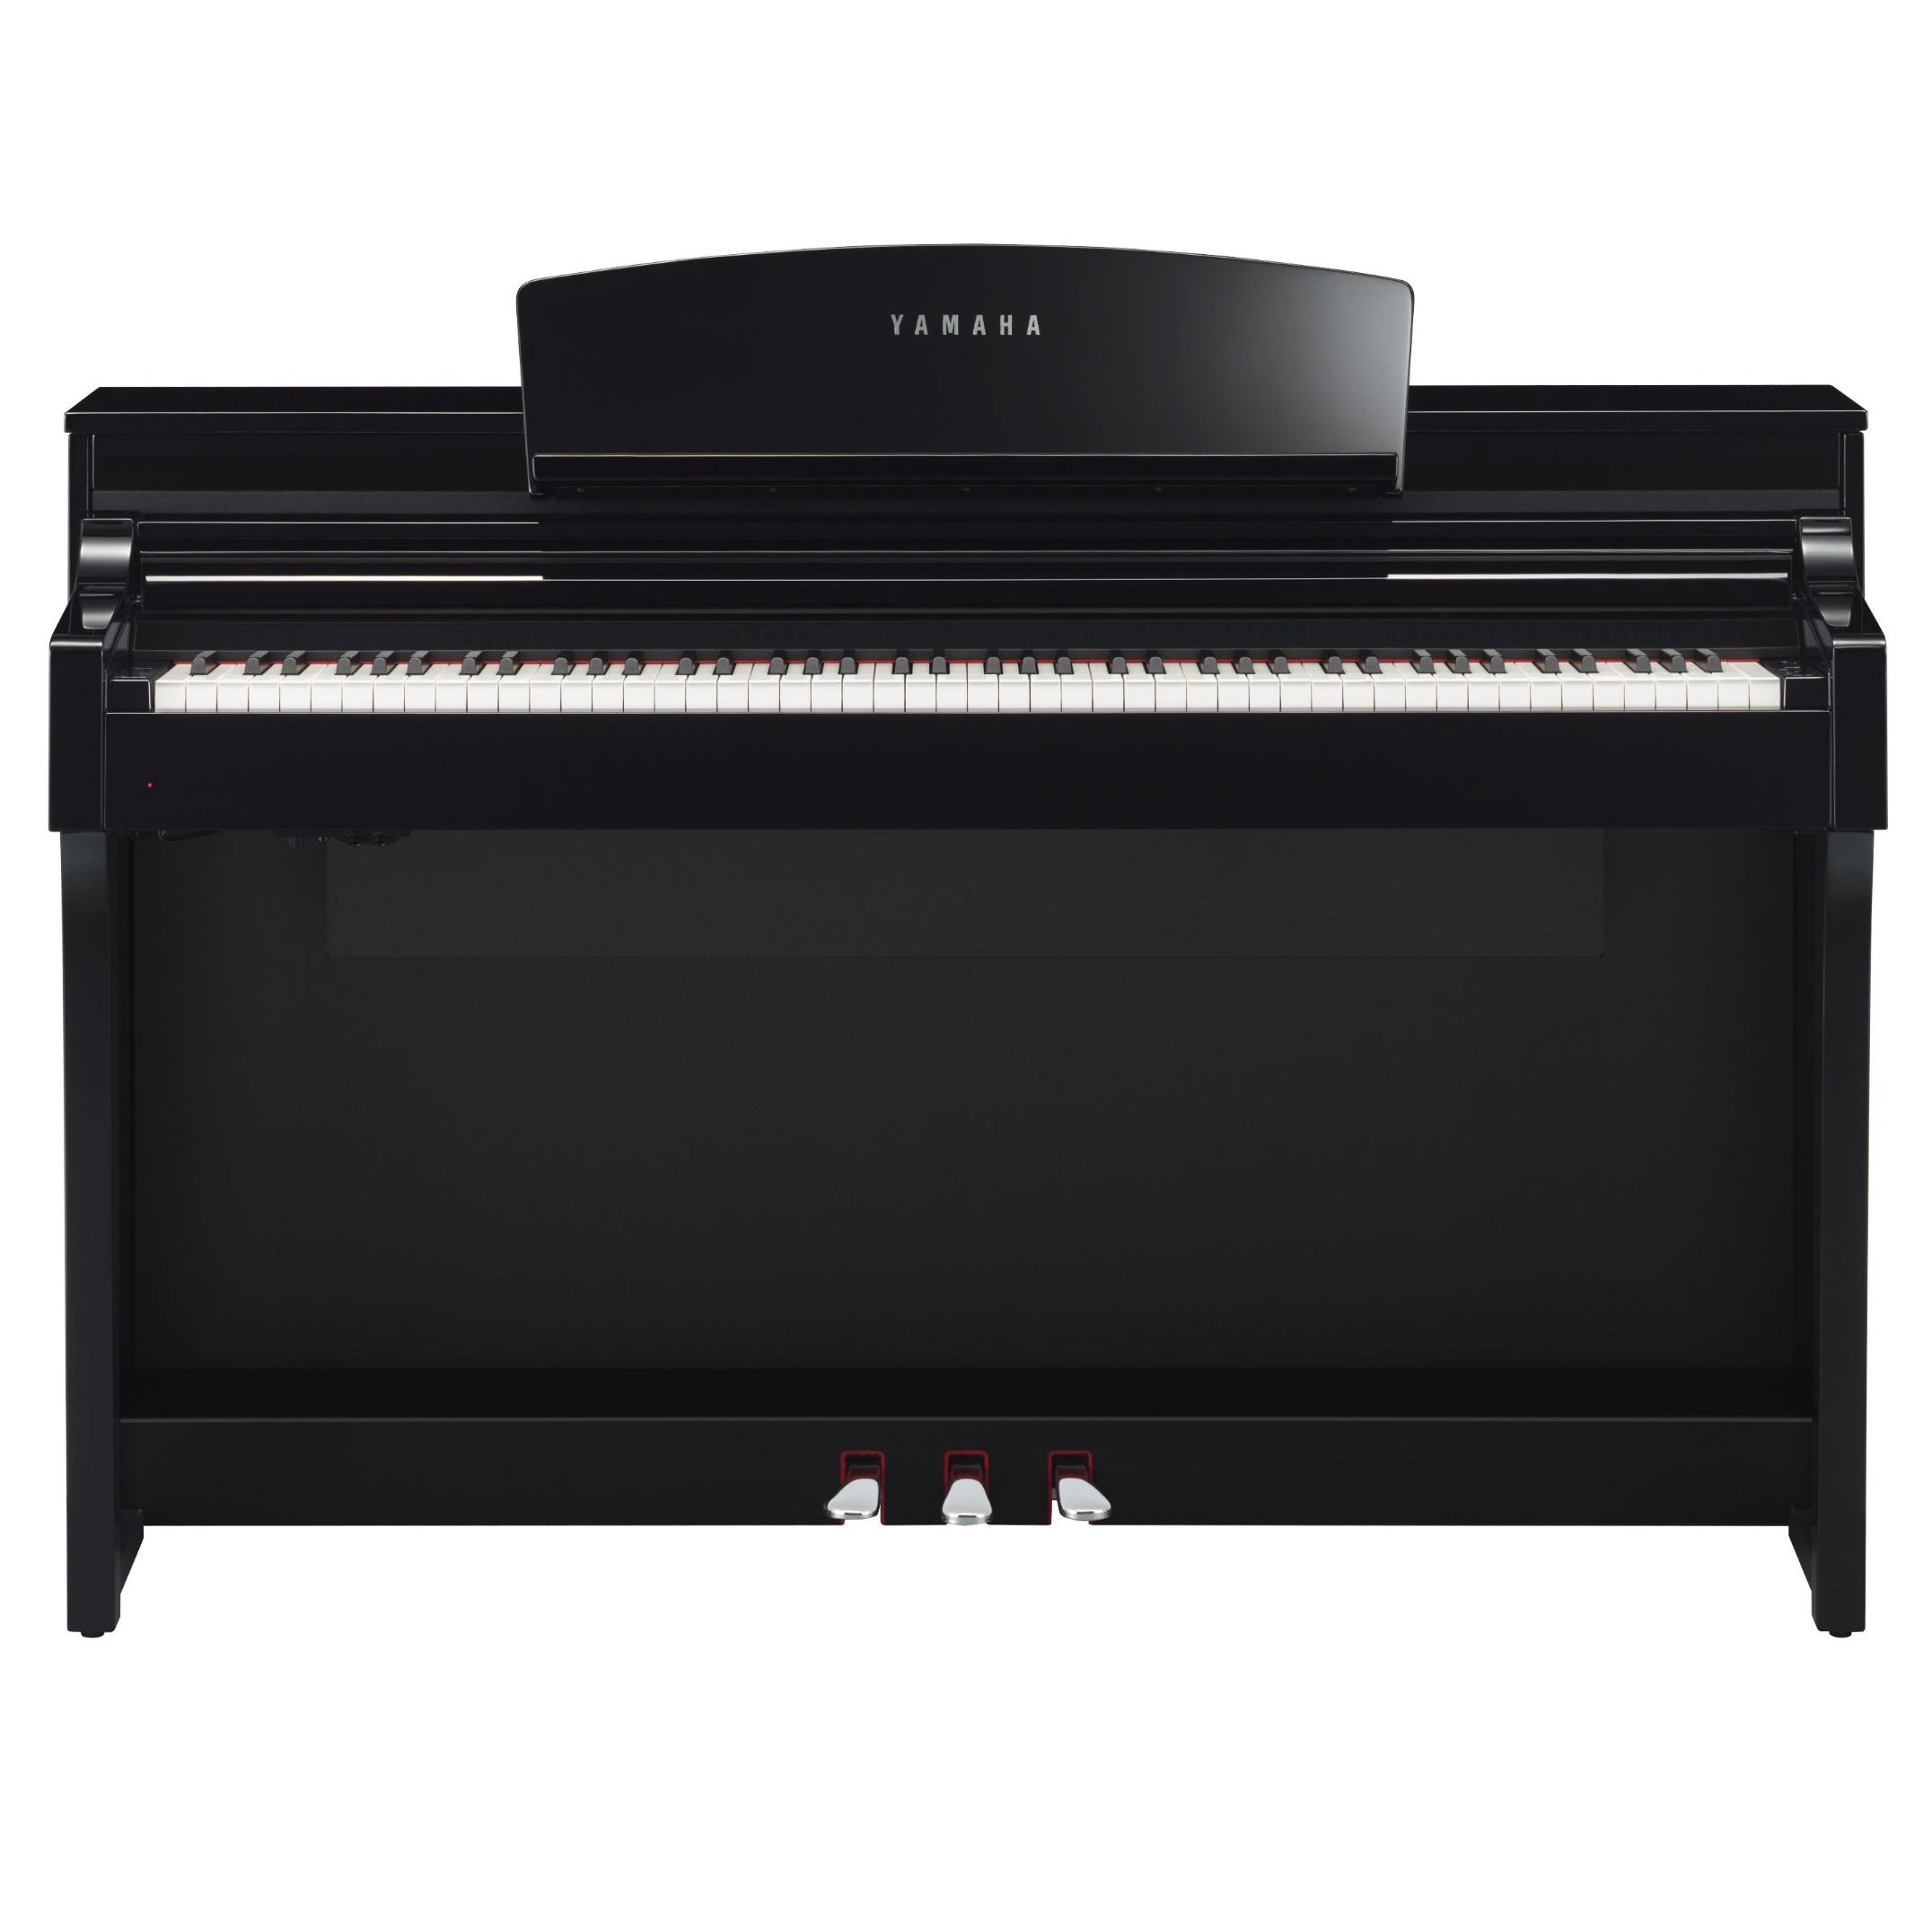 Yamaha Clavinova CSP170 Digital Piano with matching bench